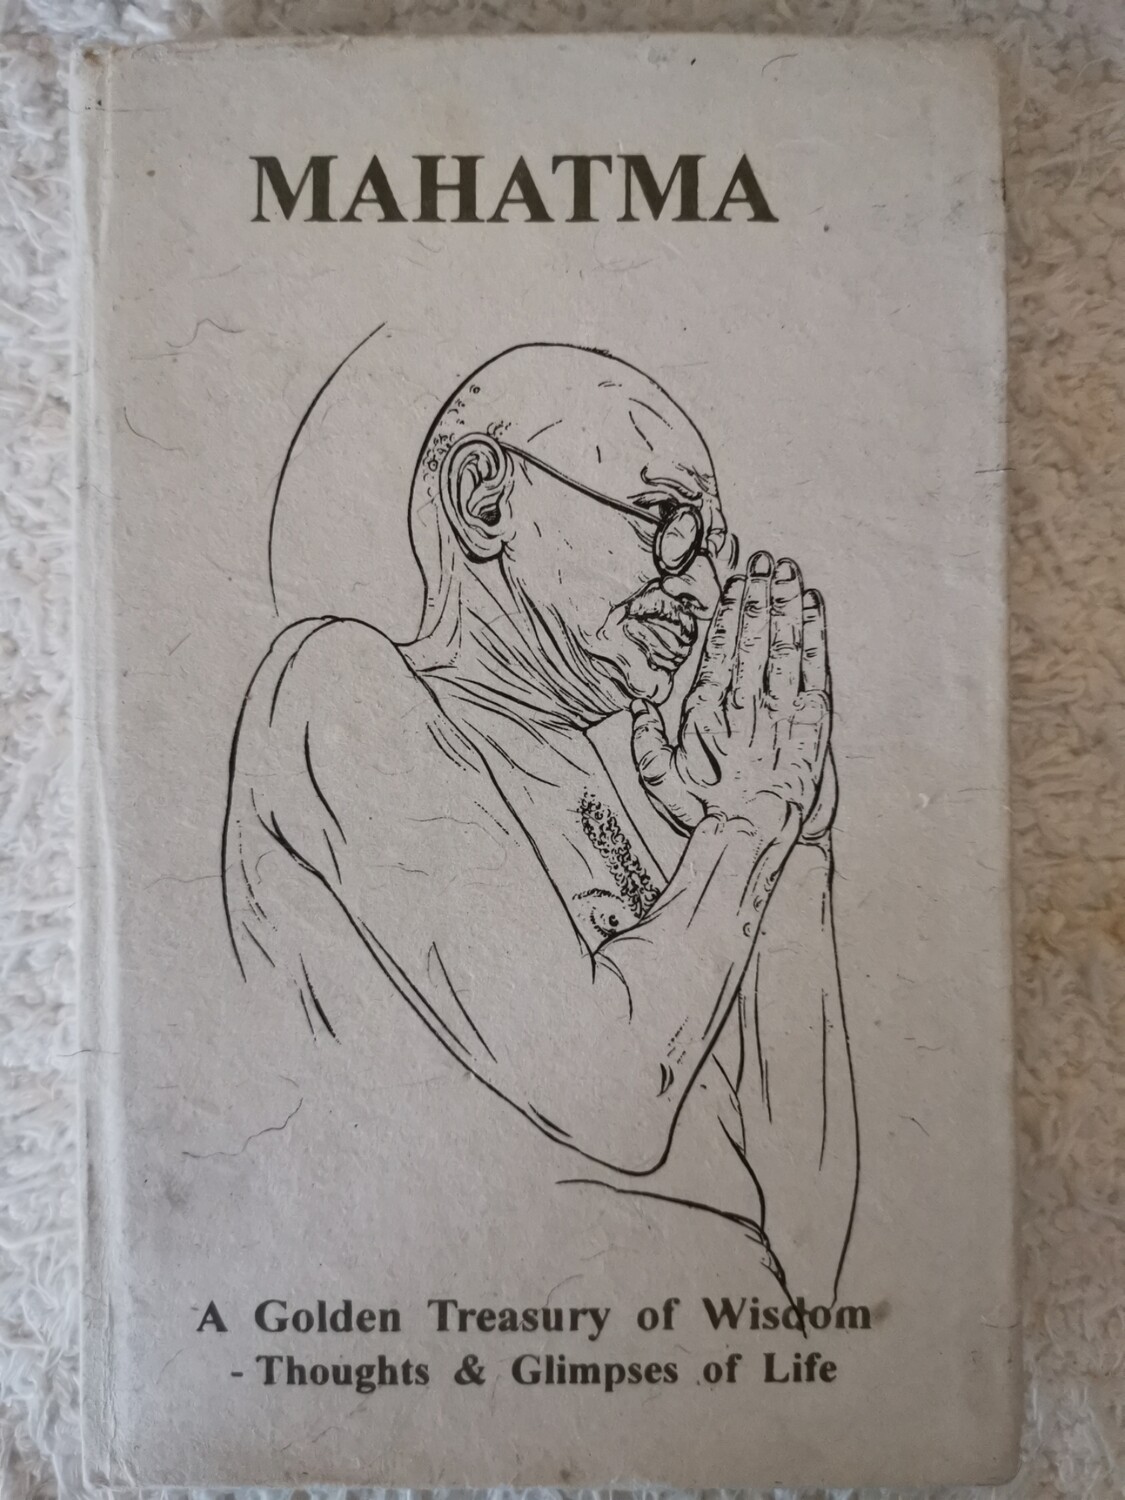 Mahatma A golden treasury of wisdom, Sri Meghshyam